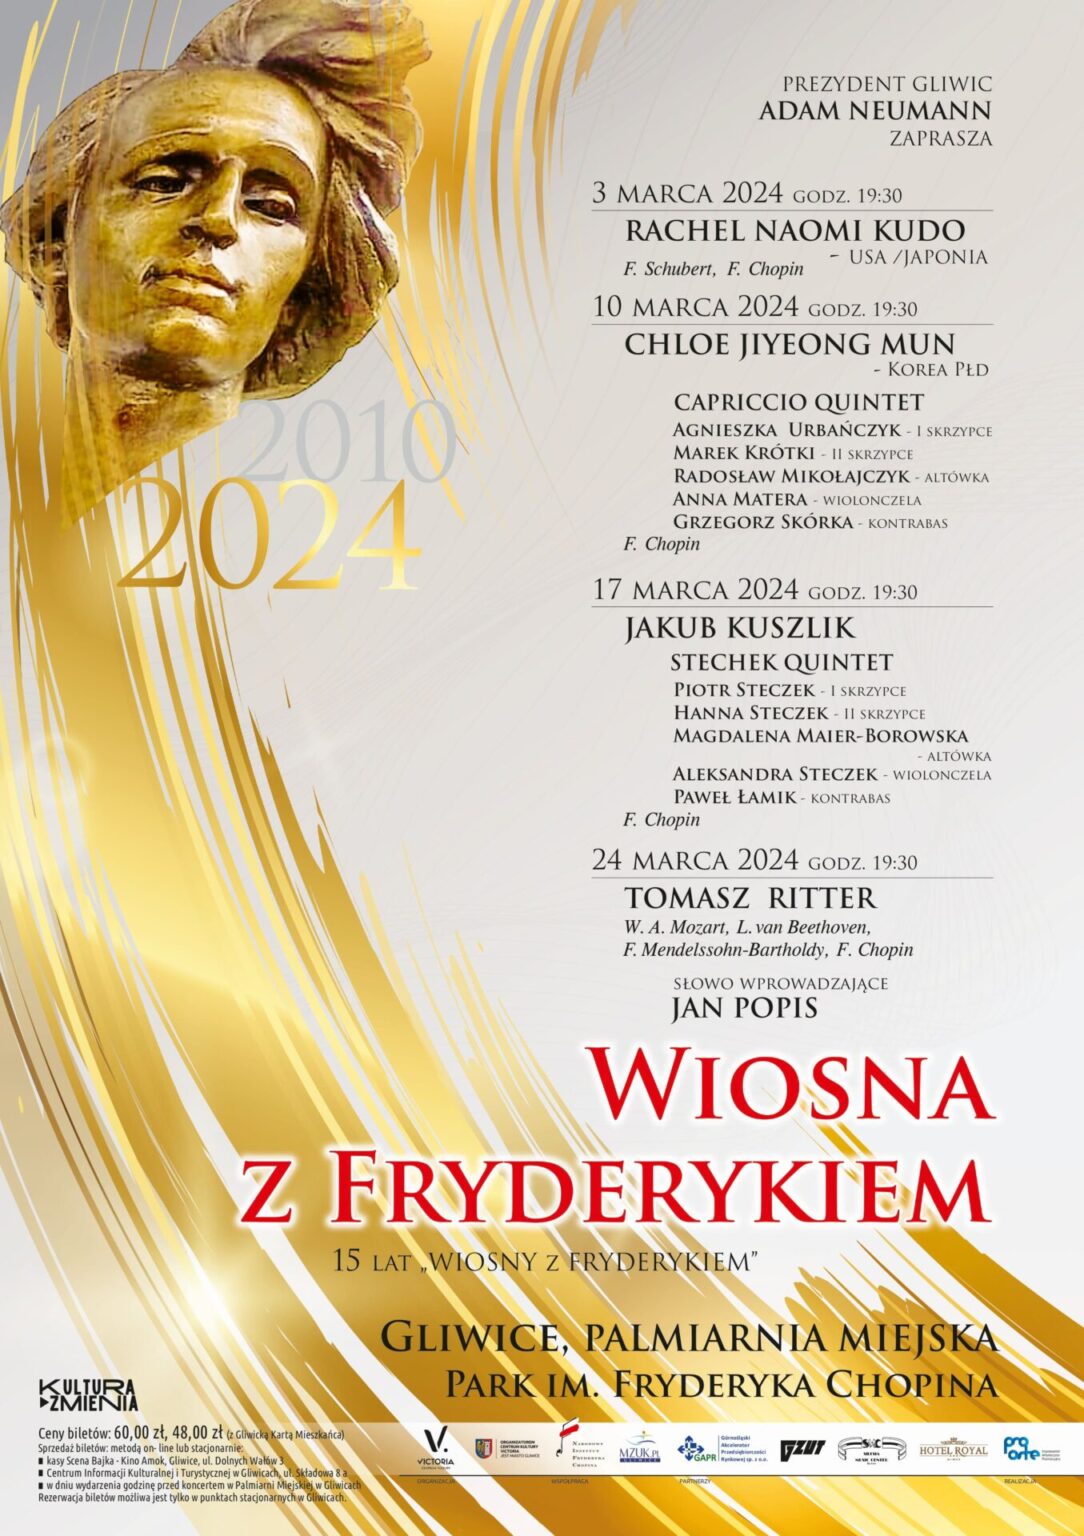 Podobizna f. Chopina, rozpiska koncertów/plakat